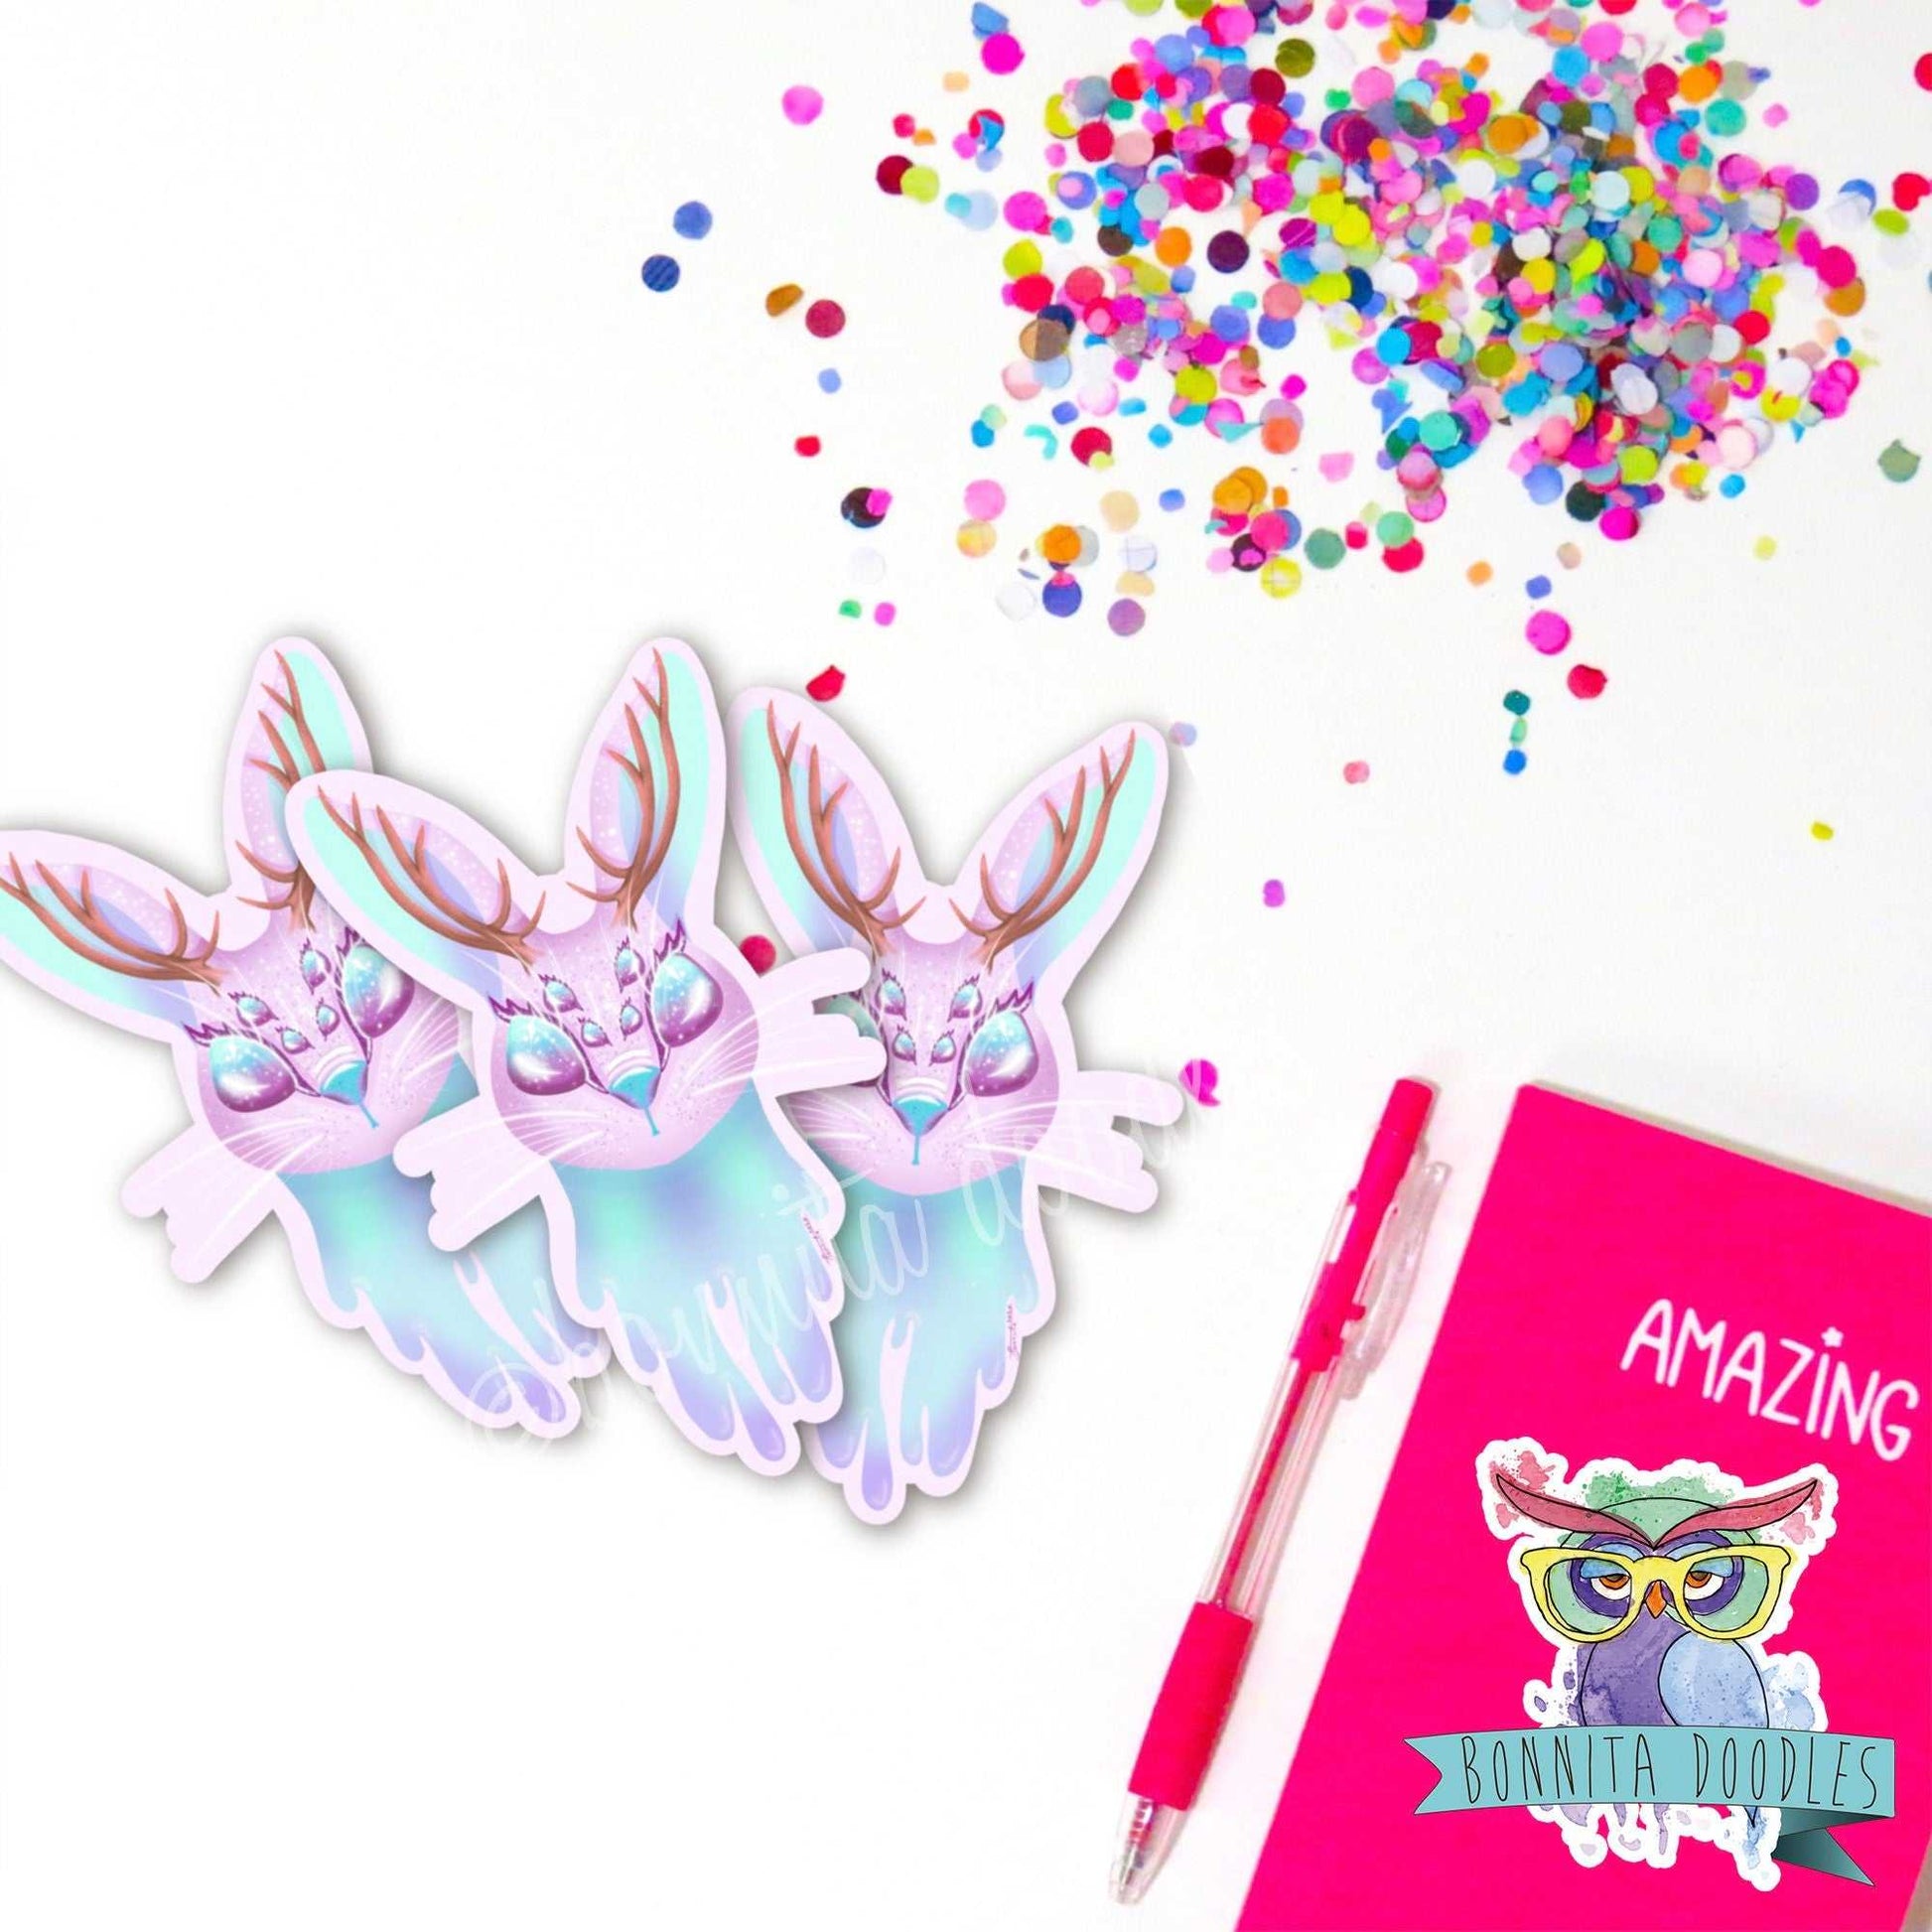 Cute Hare / Rabbit sticker / Jackalope